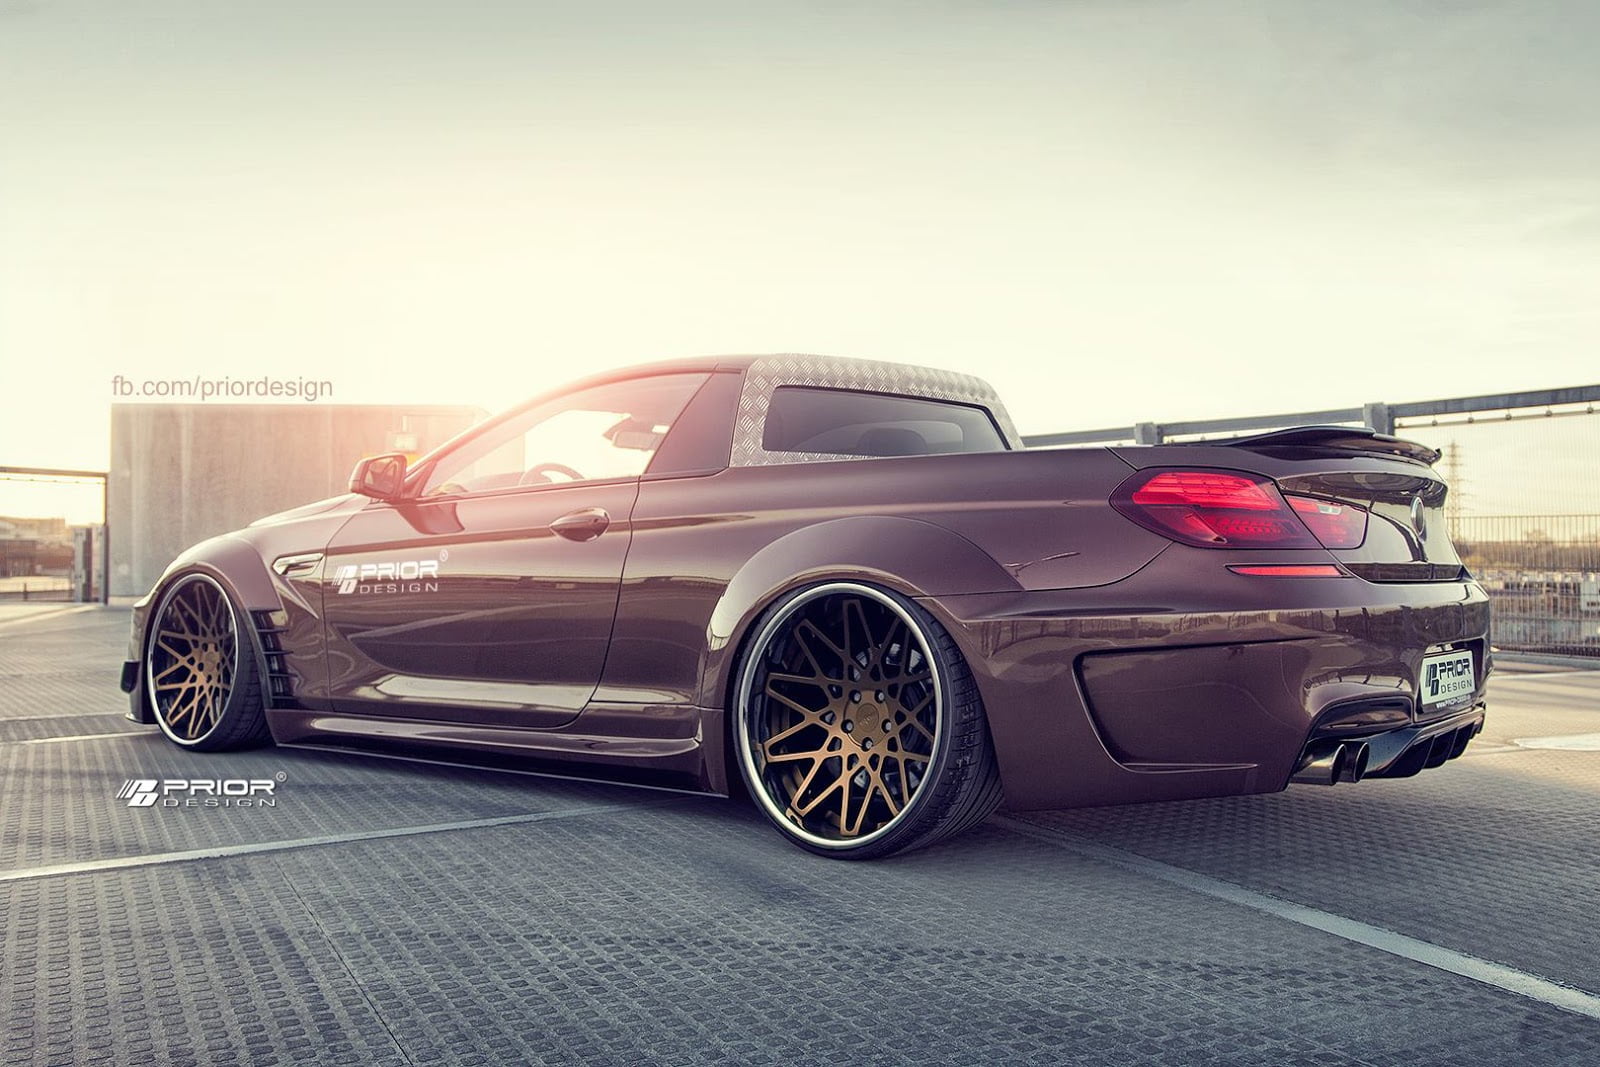 render-prior-designs-BMW-M6-pick-up